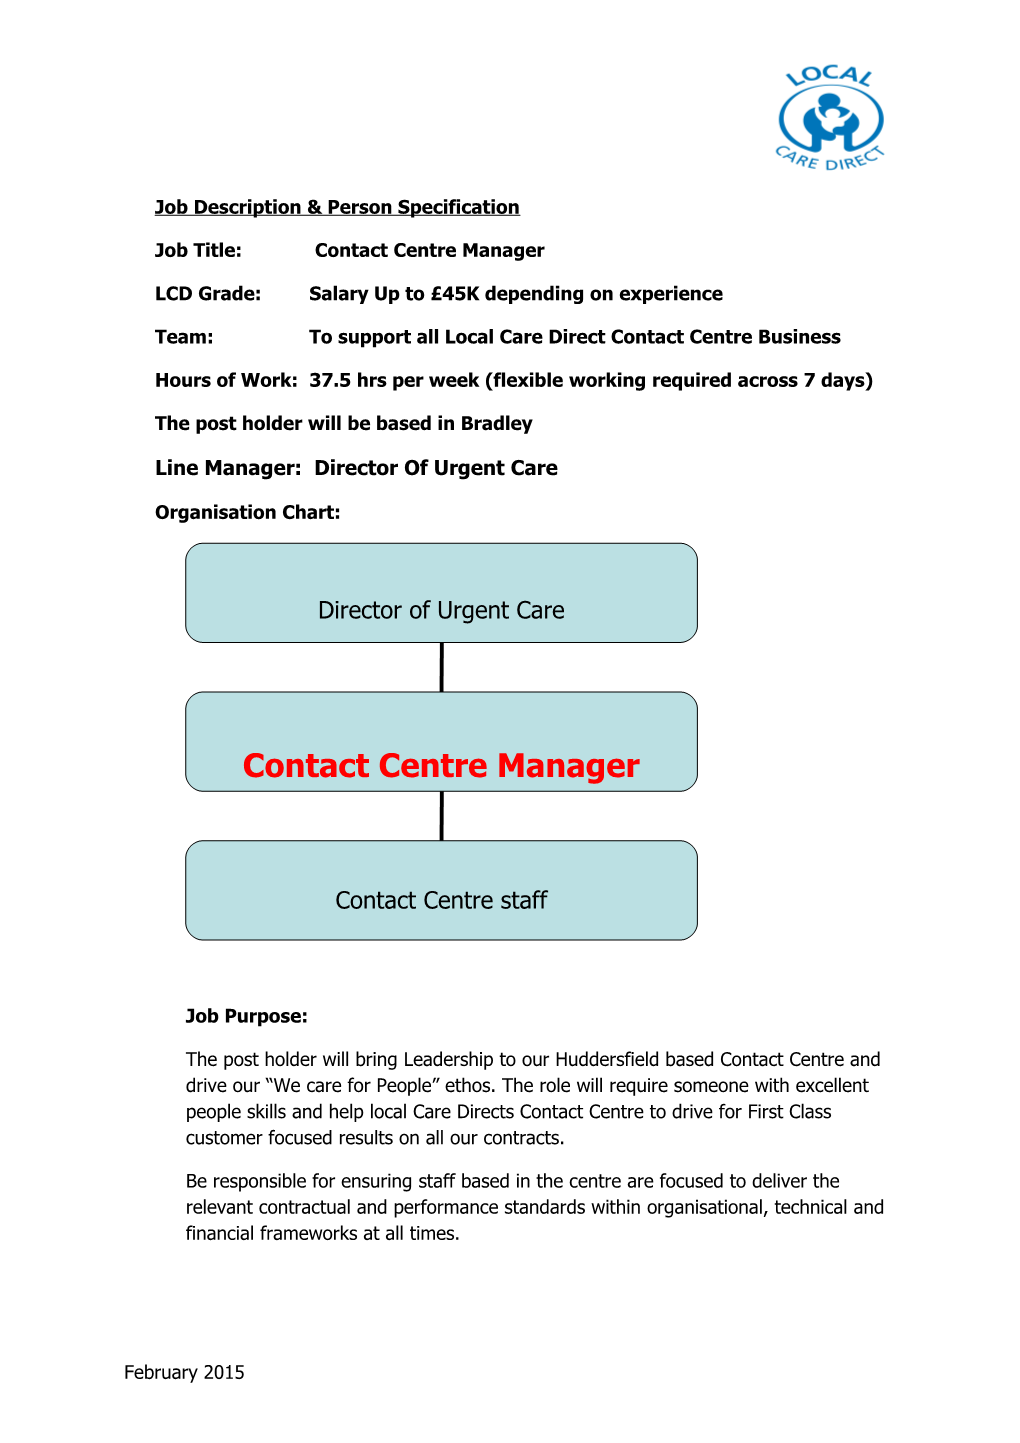 Job Description & Person Specification s4